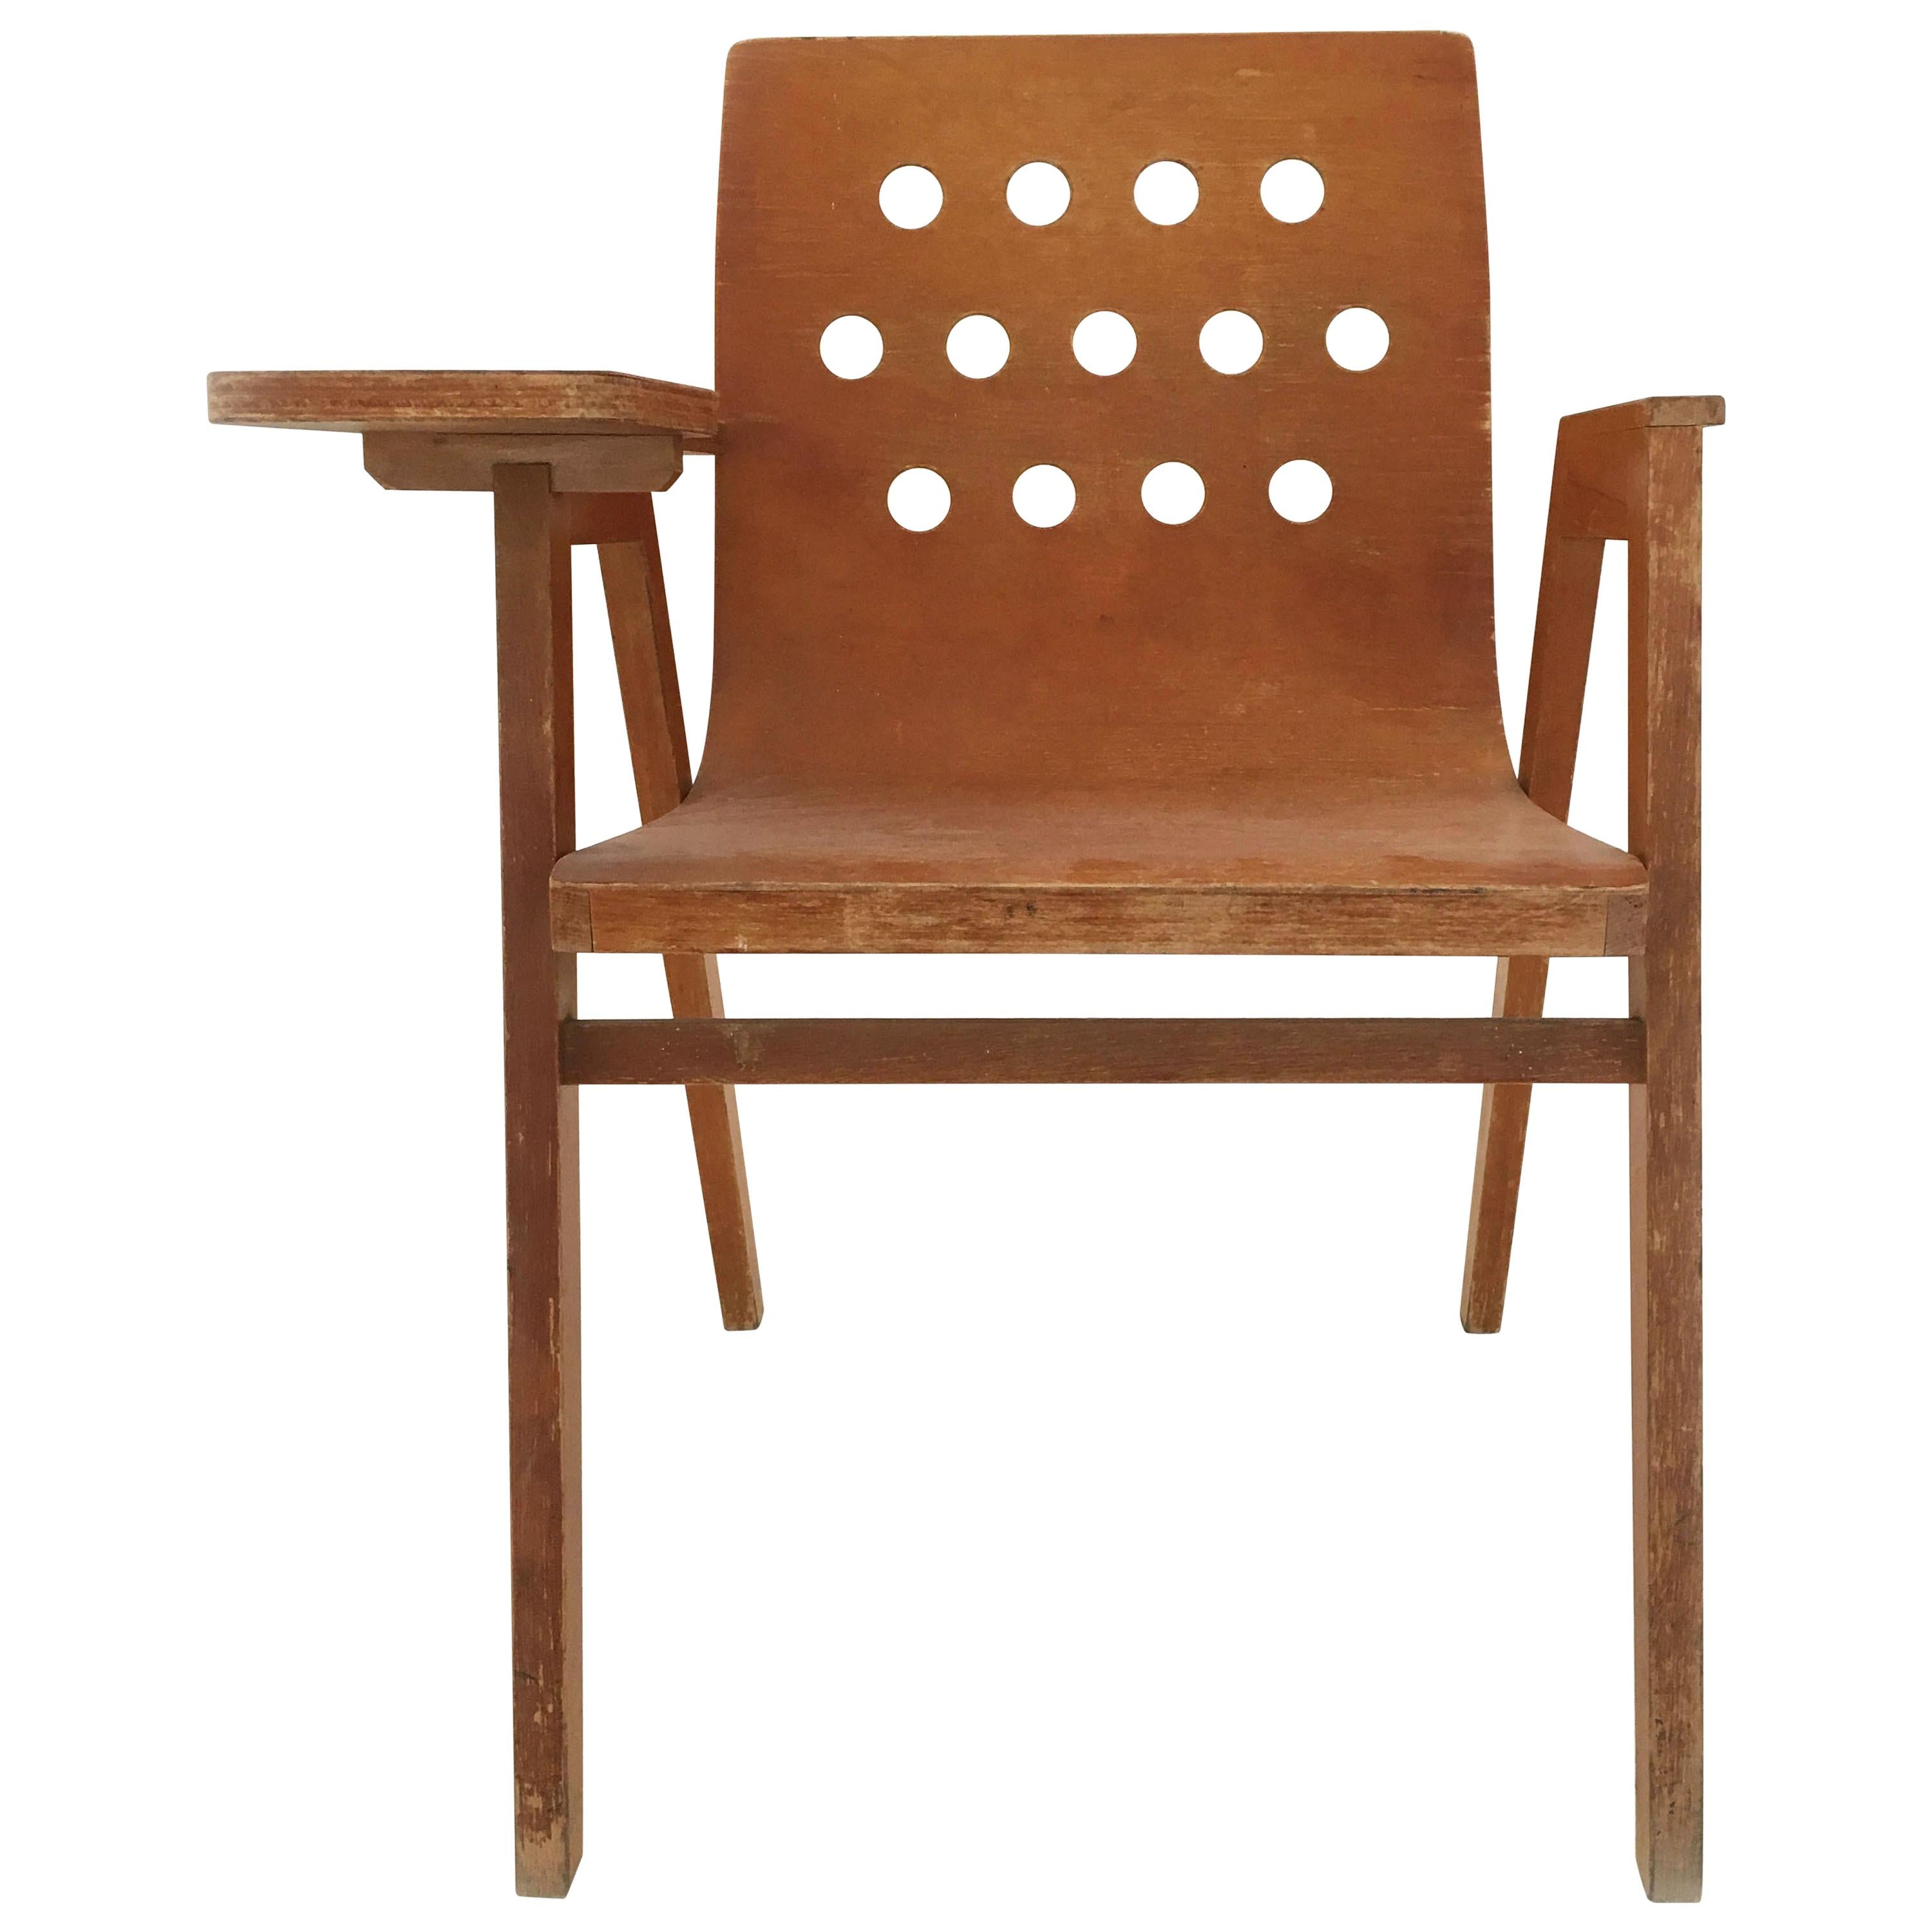 Roland Rainer Stadthallen Chair with Writing Desk, Austria, 1950s For Sale